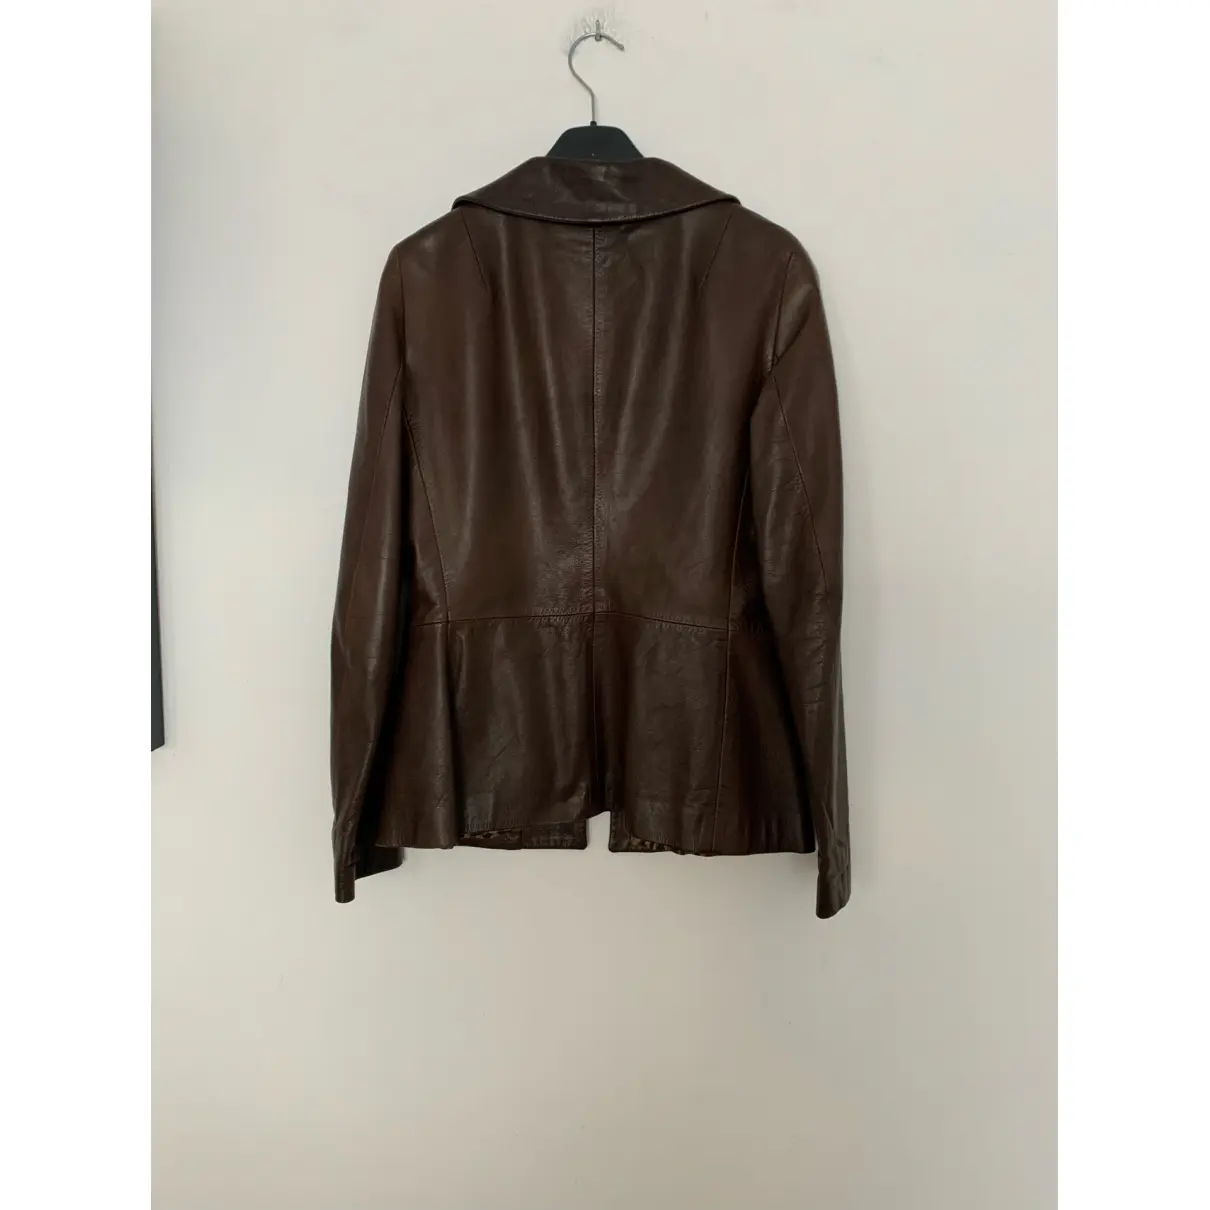 Buy Dolce & Gabbana Leather biker jacket online